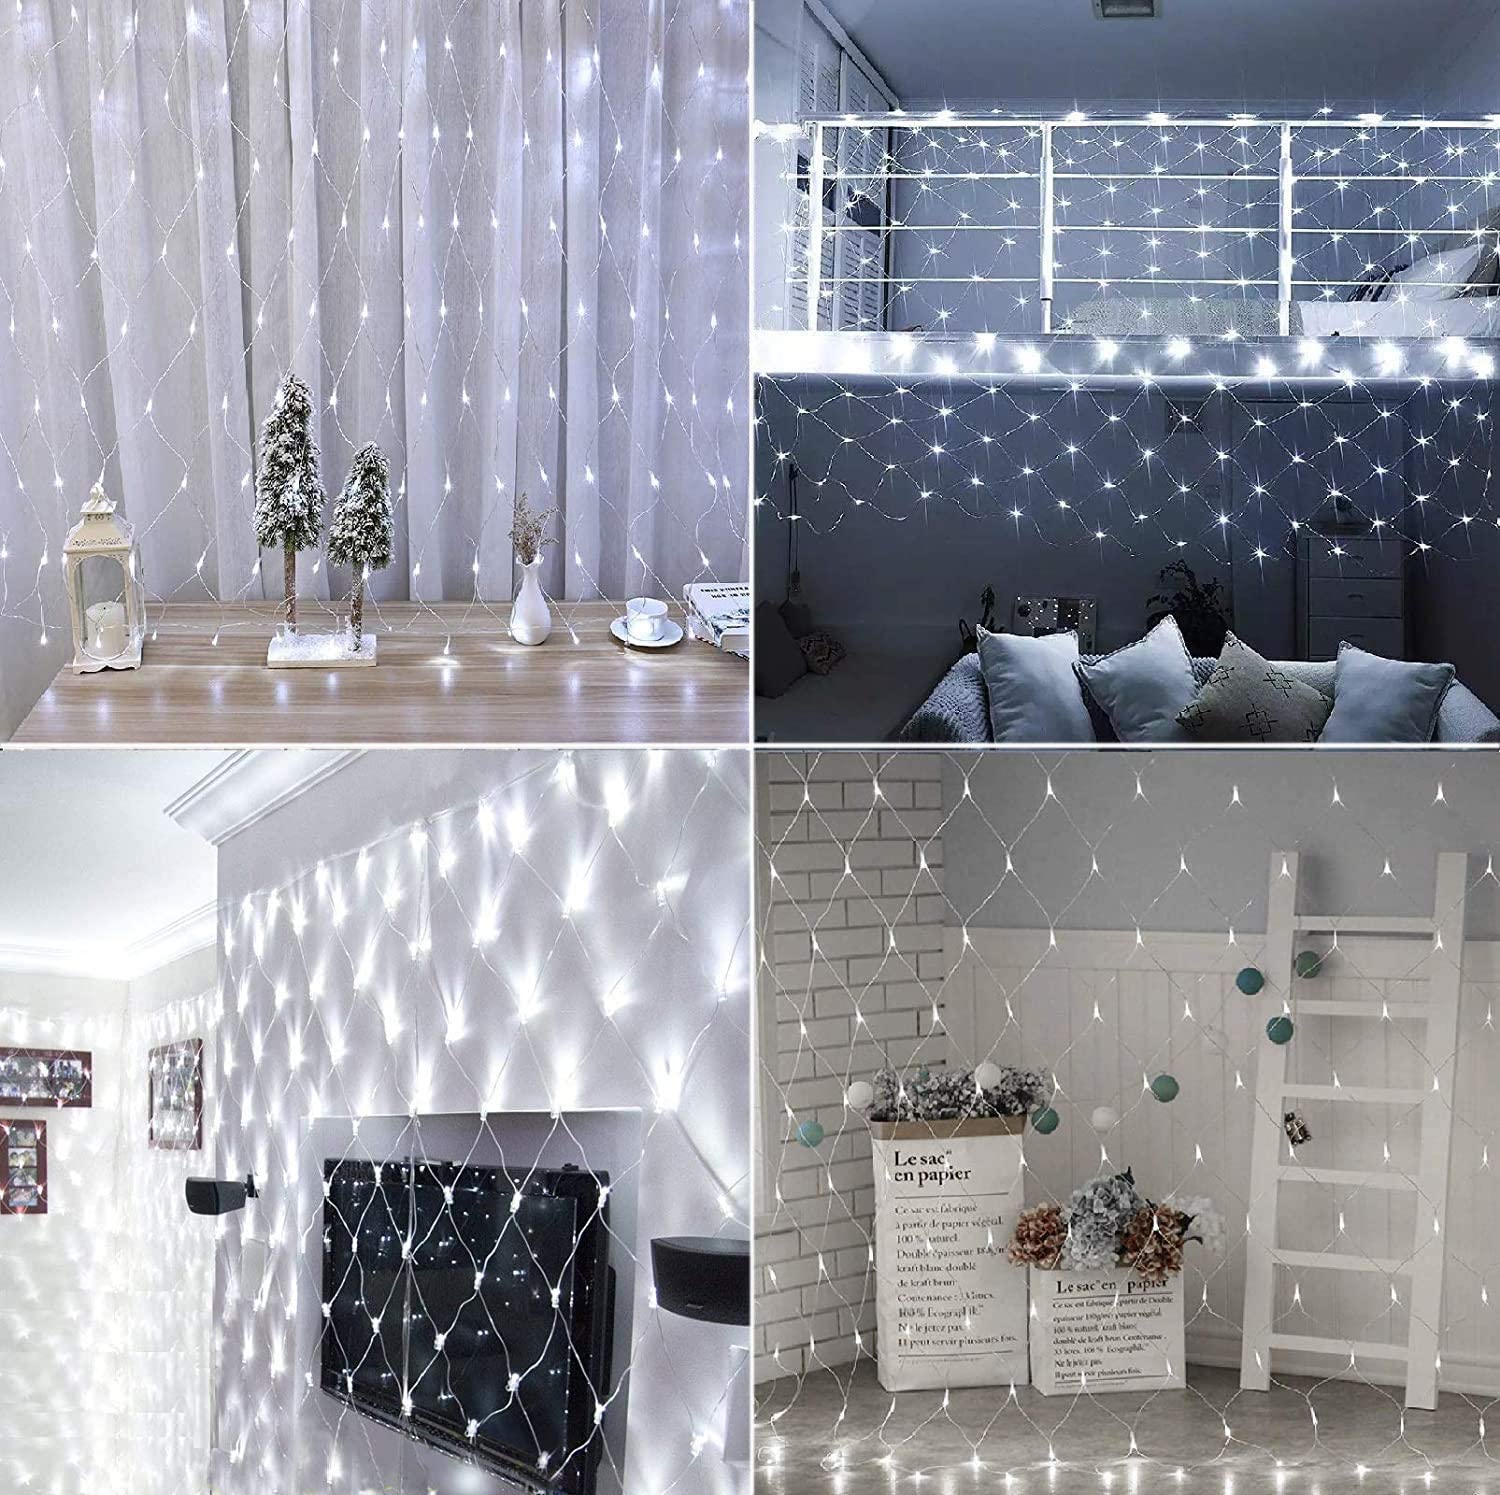 LED Decorative Net Lights - e4cents